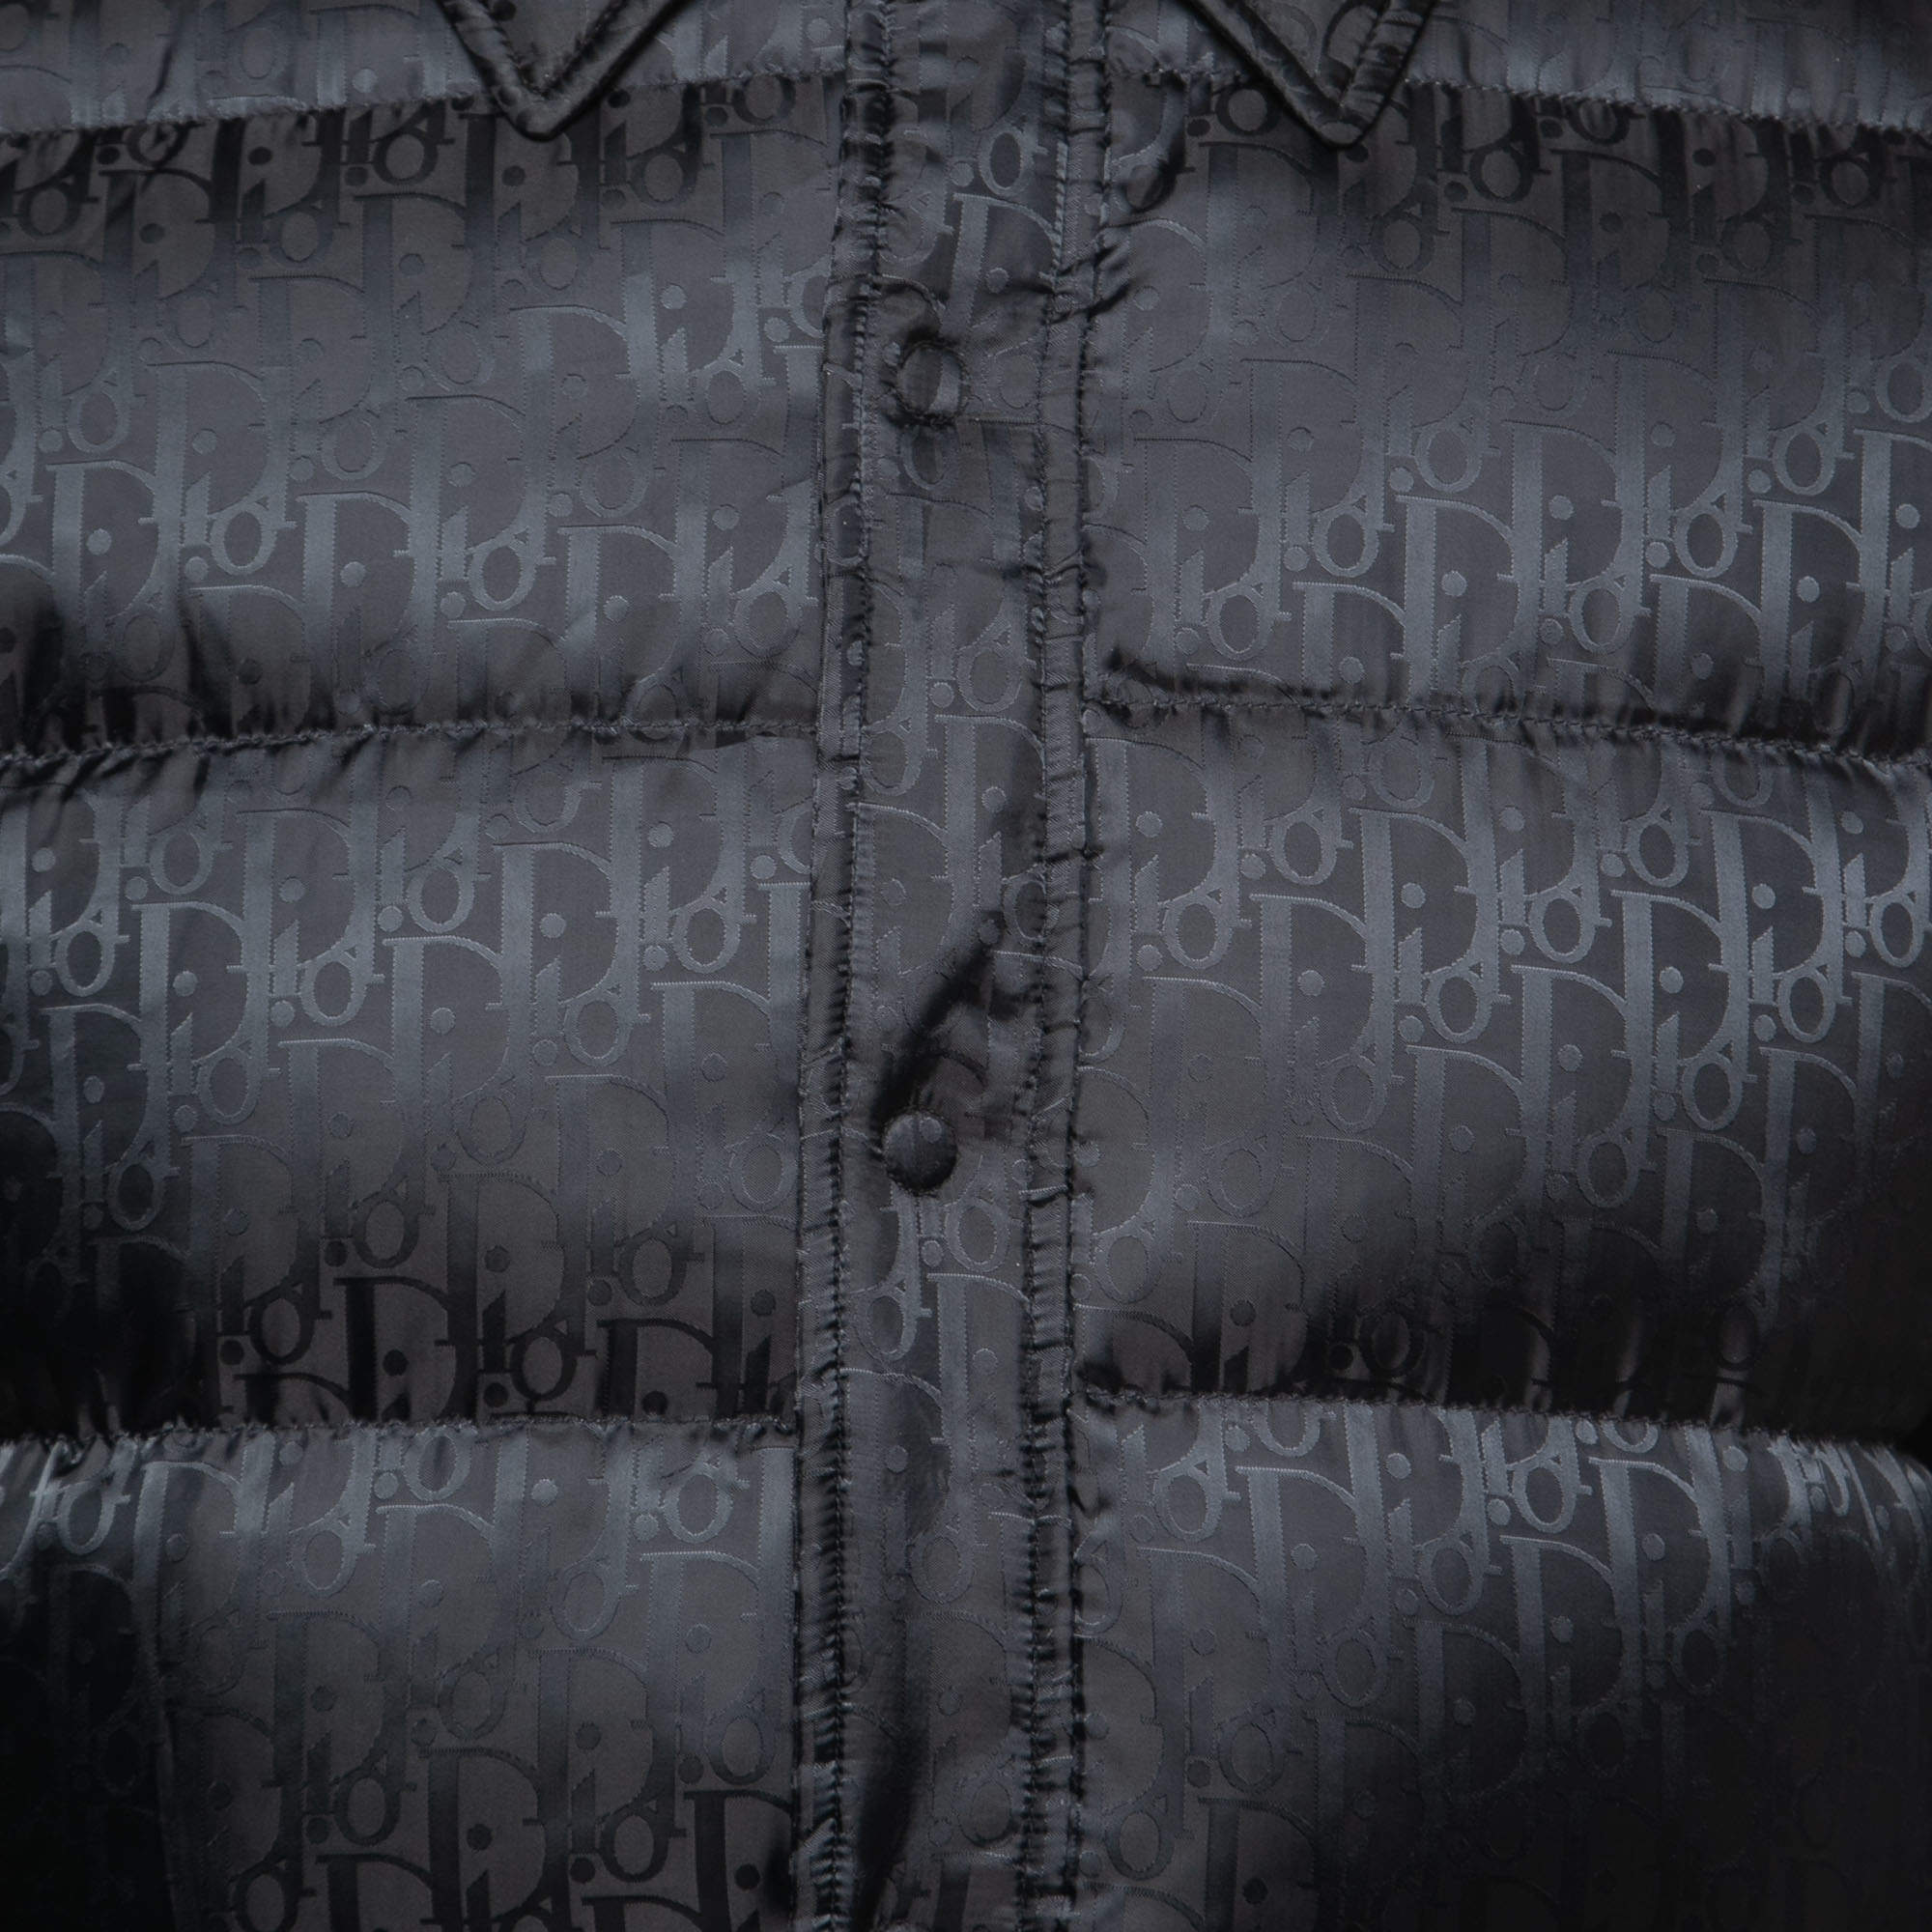 Dior Mens Oblique Logo Puffer Jacket Black Nylon Jacquard Down Coat